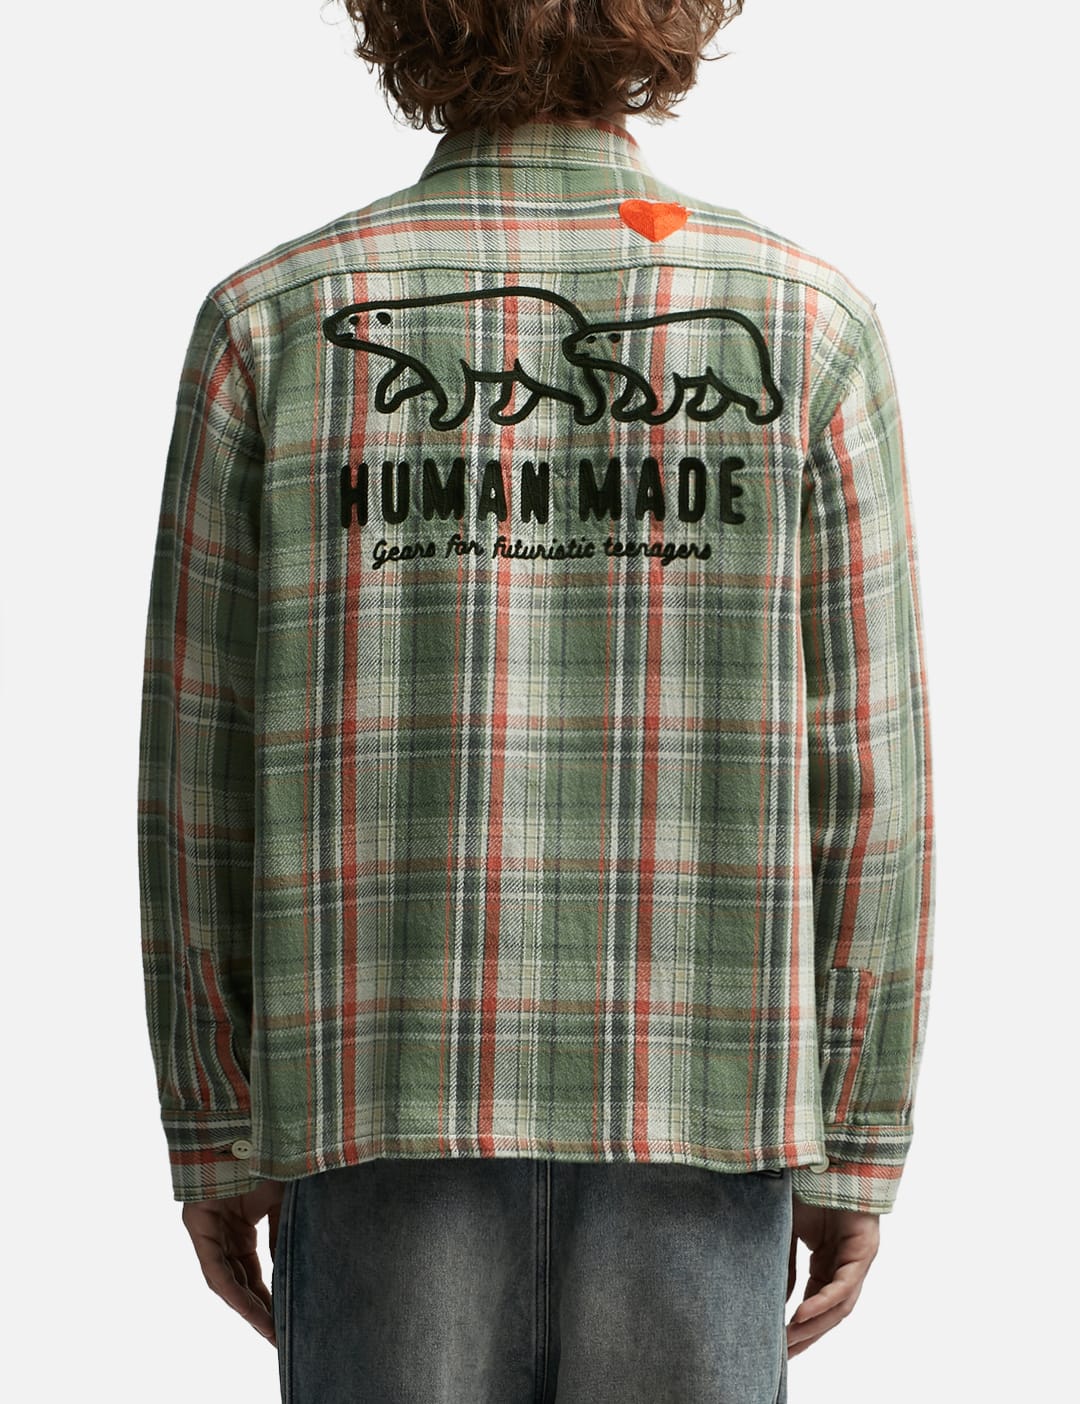 Human Made - Check Overshirt | HBX - Globally Curated Fashion and